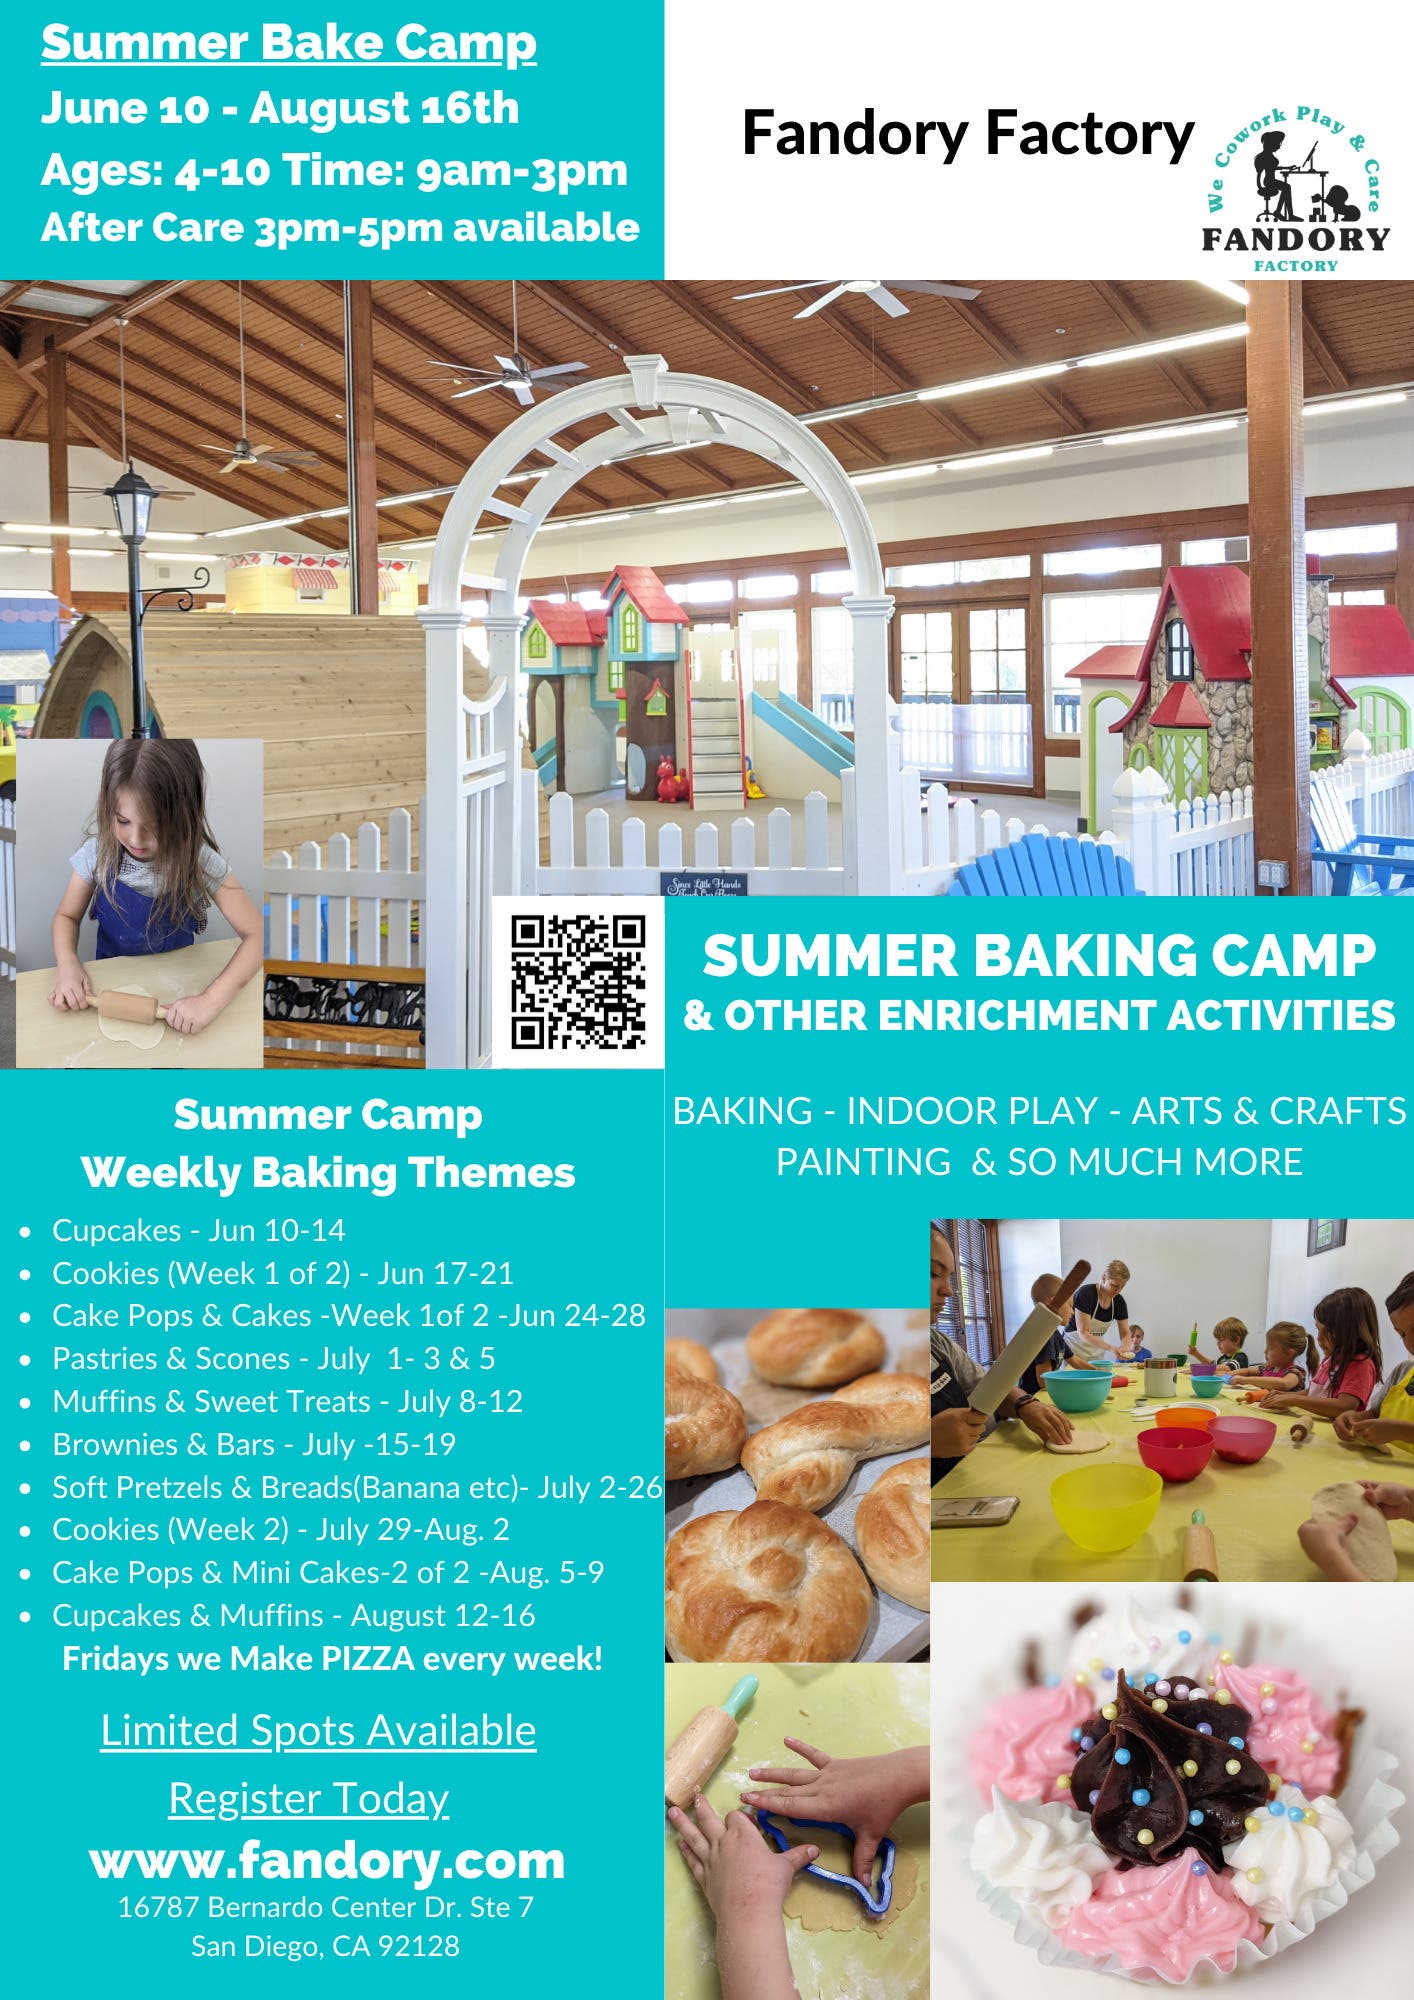 Kids Baking Camp - Muffins & Sweet Treats at Fandory